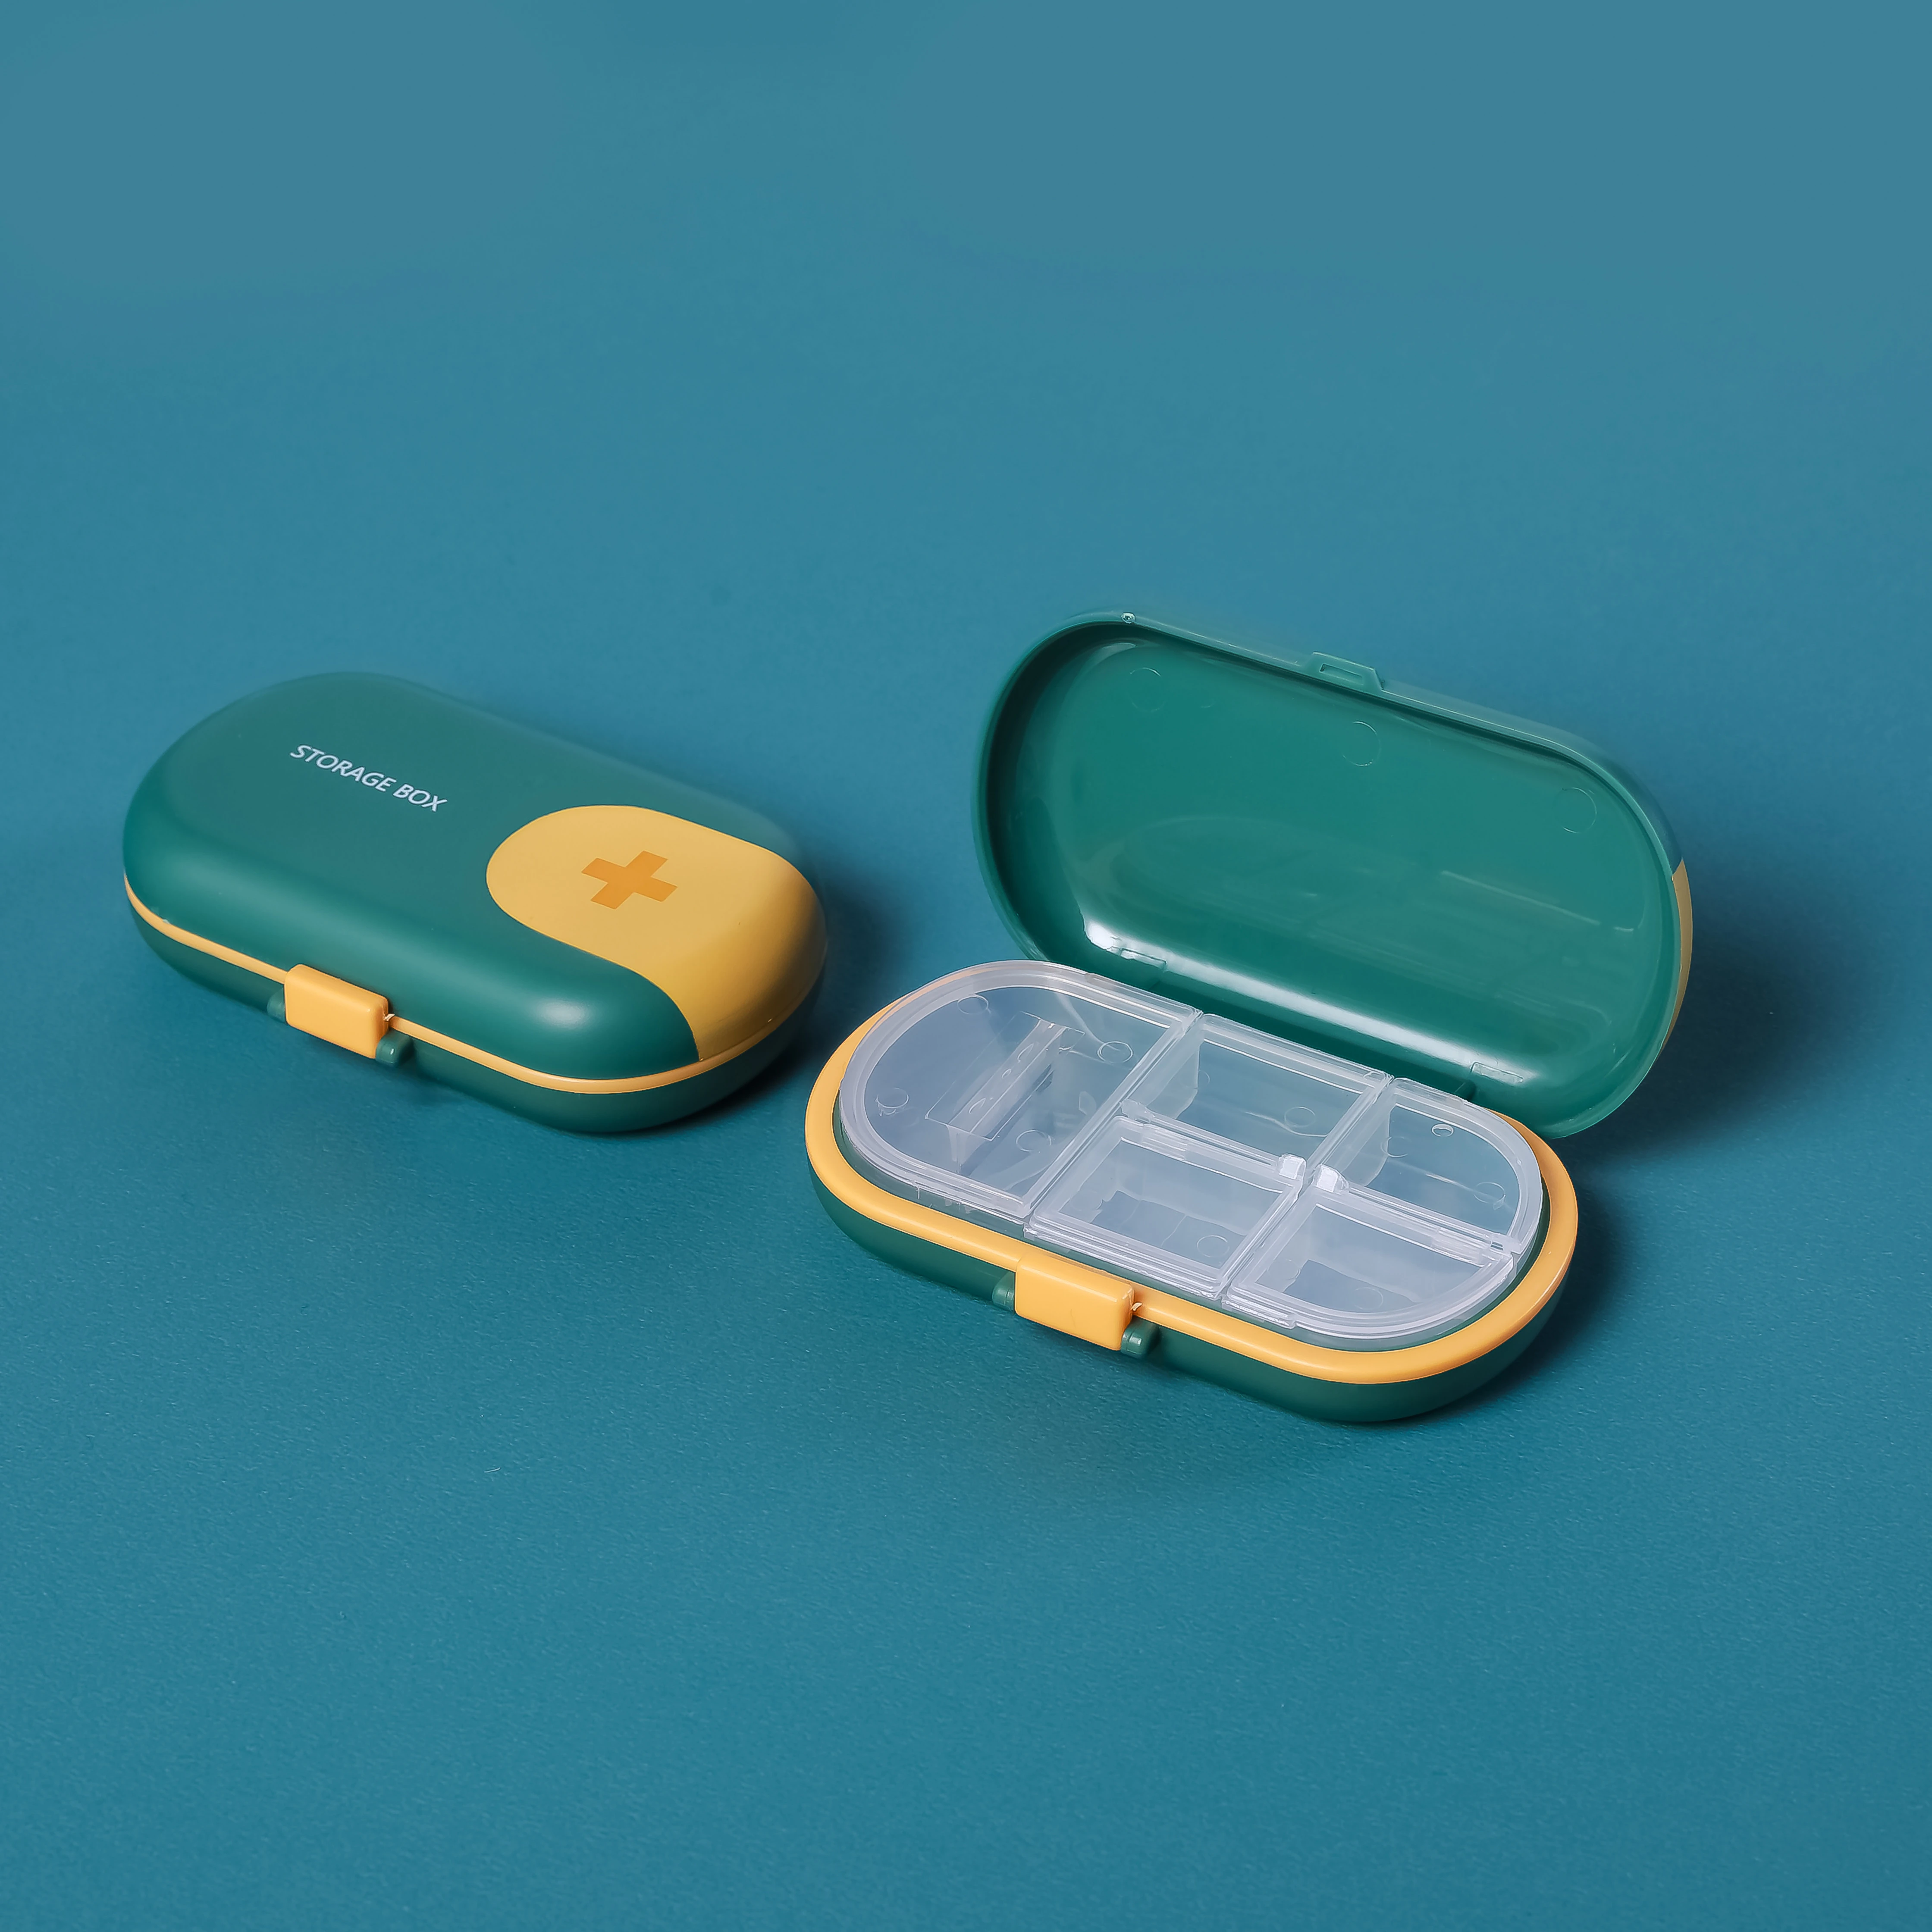 Color Waterproof Medicine Easy Pill Organizer Box Use Eco Friendly Pill Storage Cases Boxes